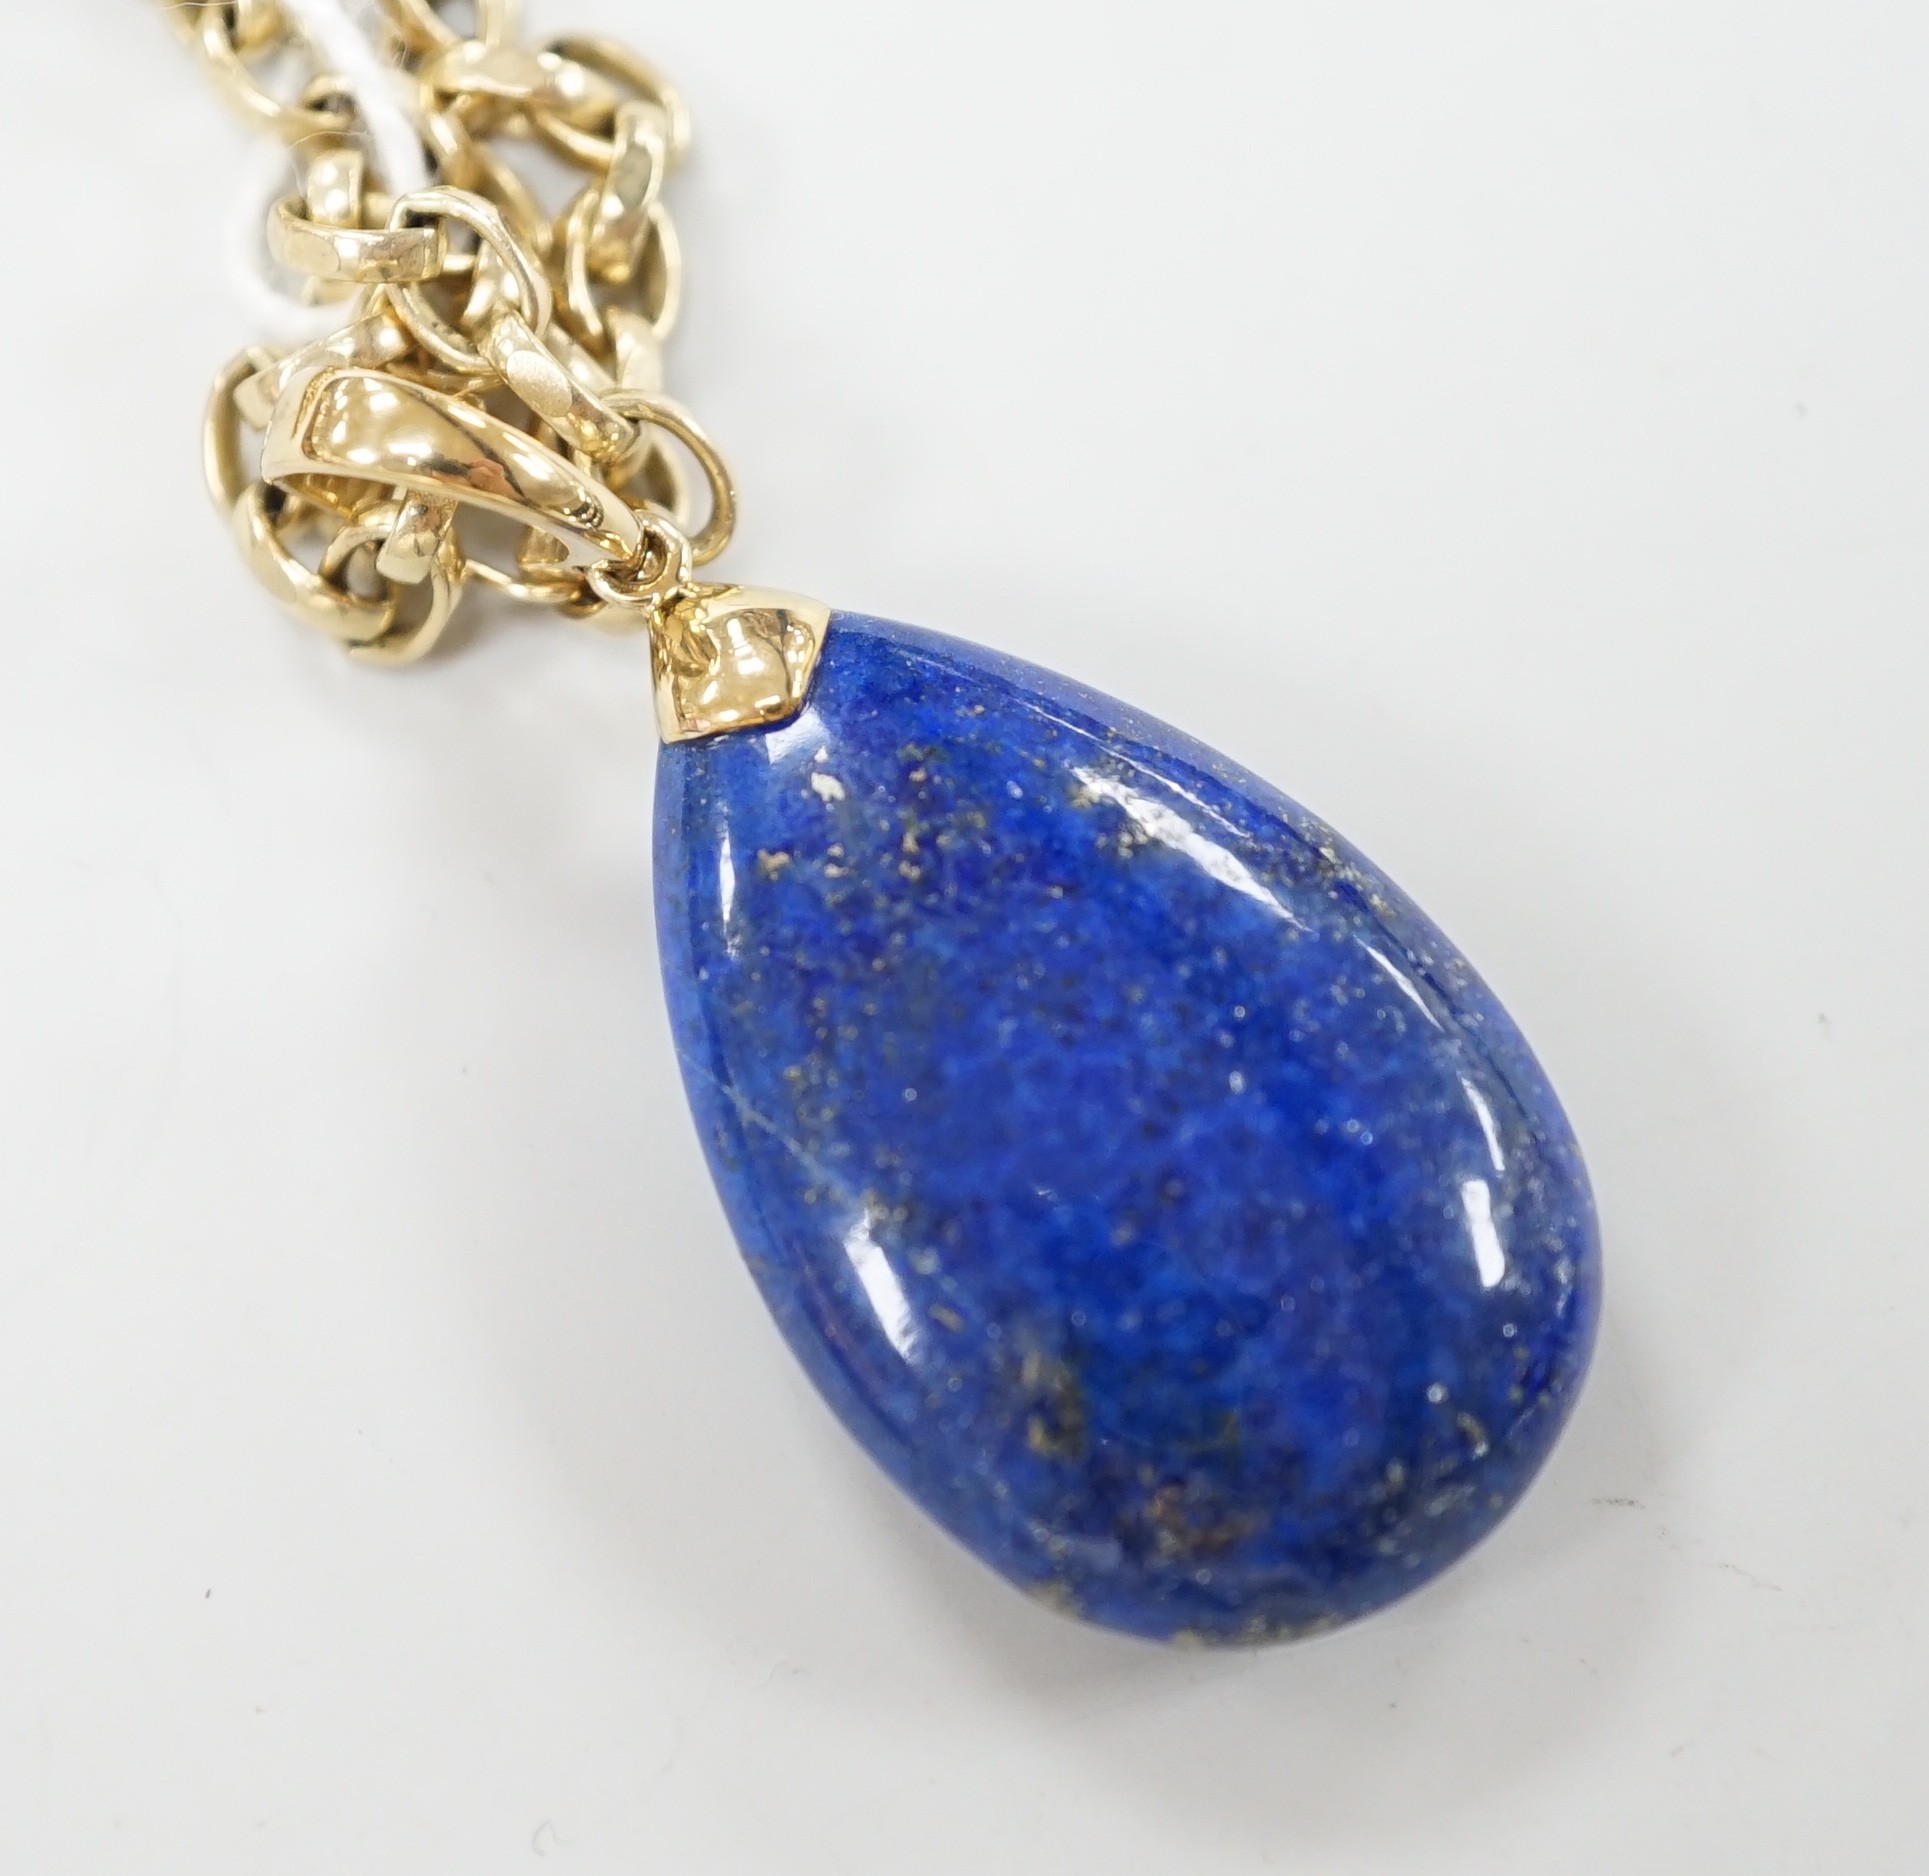 A modern 9k mounted lapis lazuli pendant, 35mm, on a 375 chain, 48cm, chain, 18.5 grams.